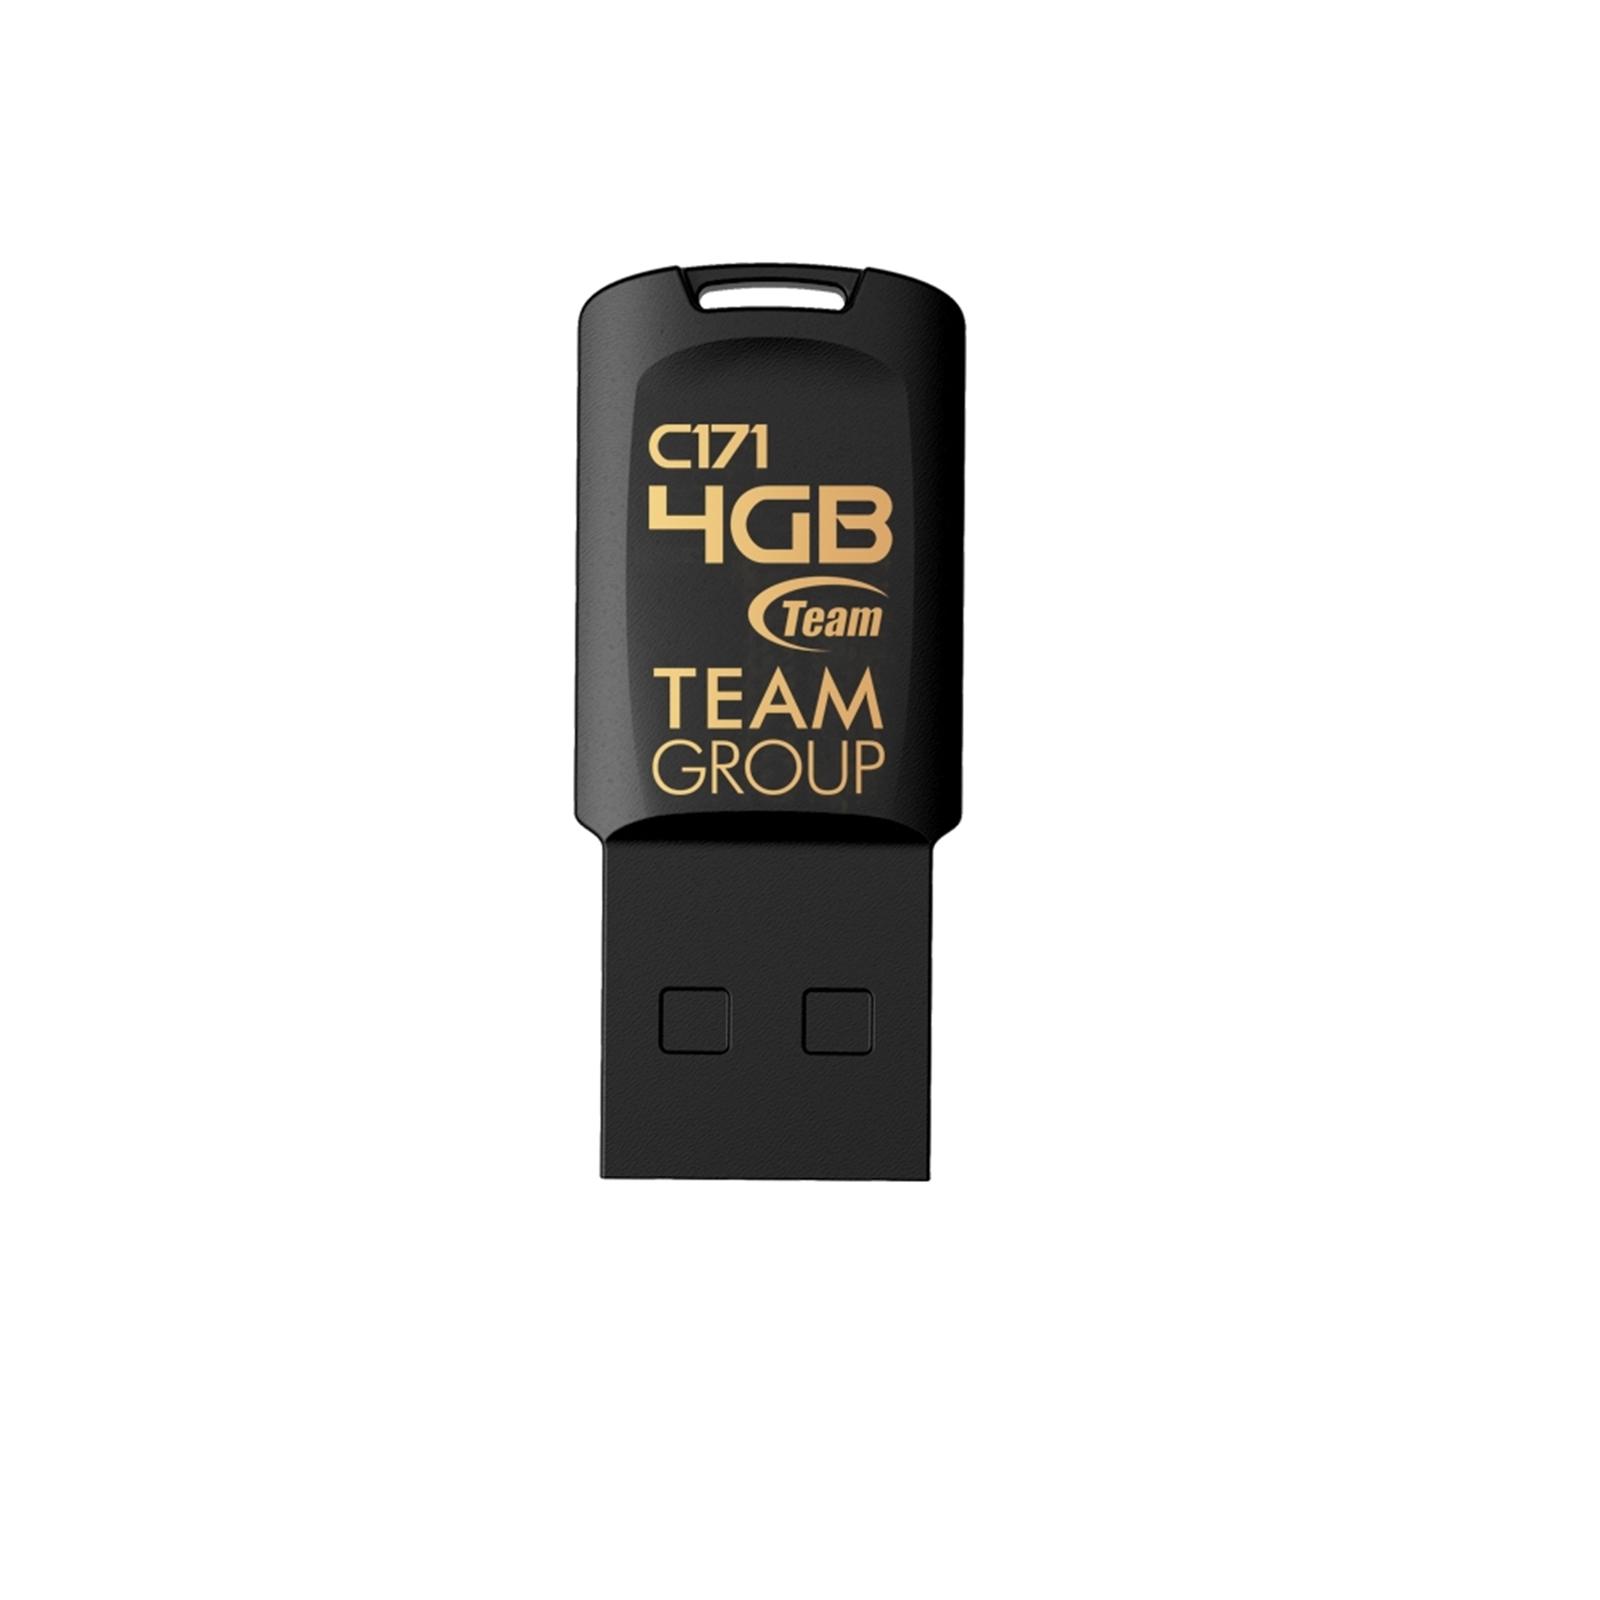 TEAM GROUP USB 2.0 Flash 4GB C171 TC1714GB01 crni